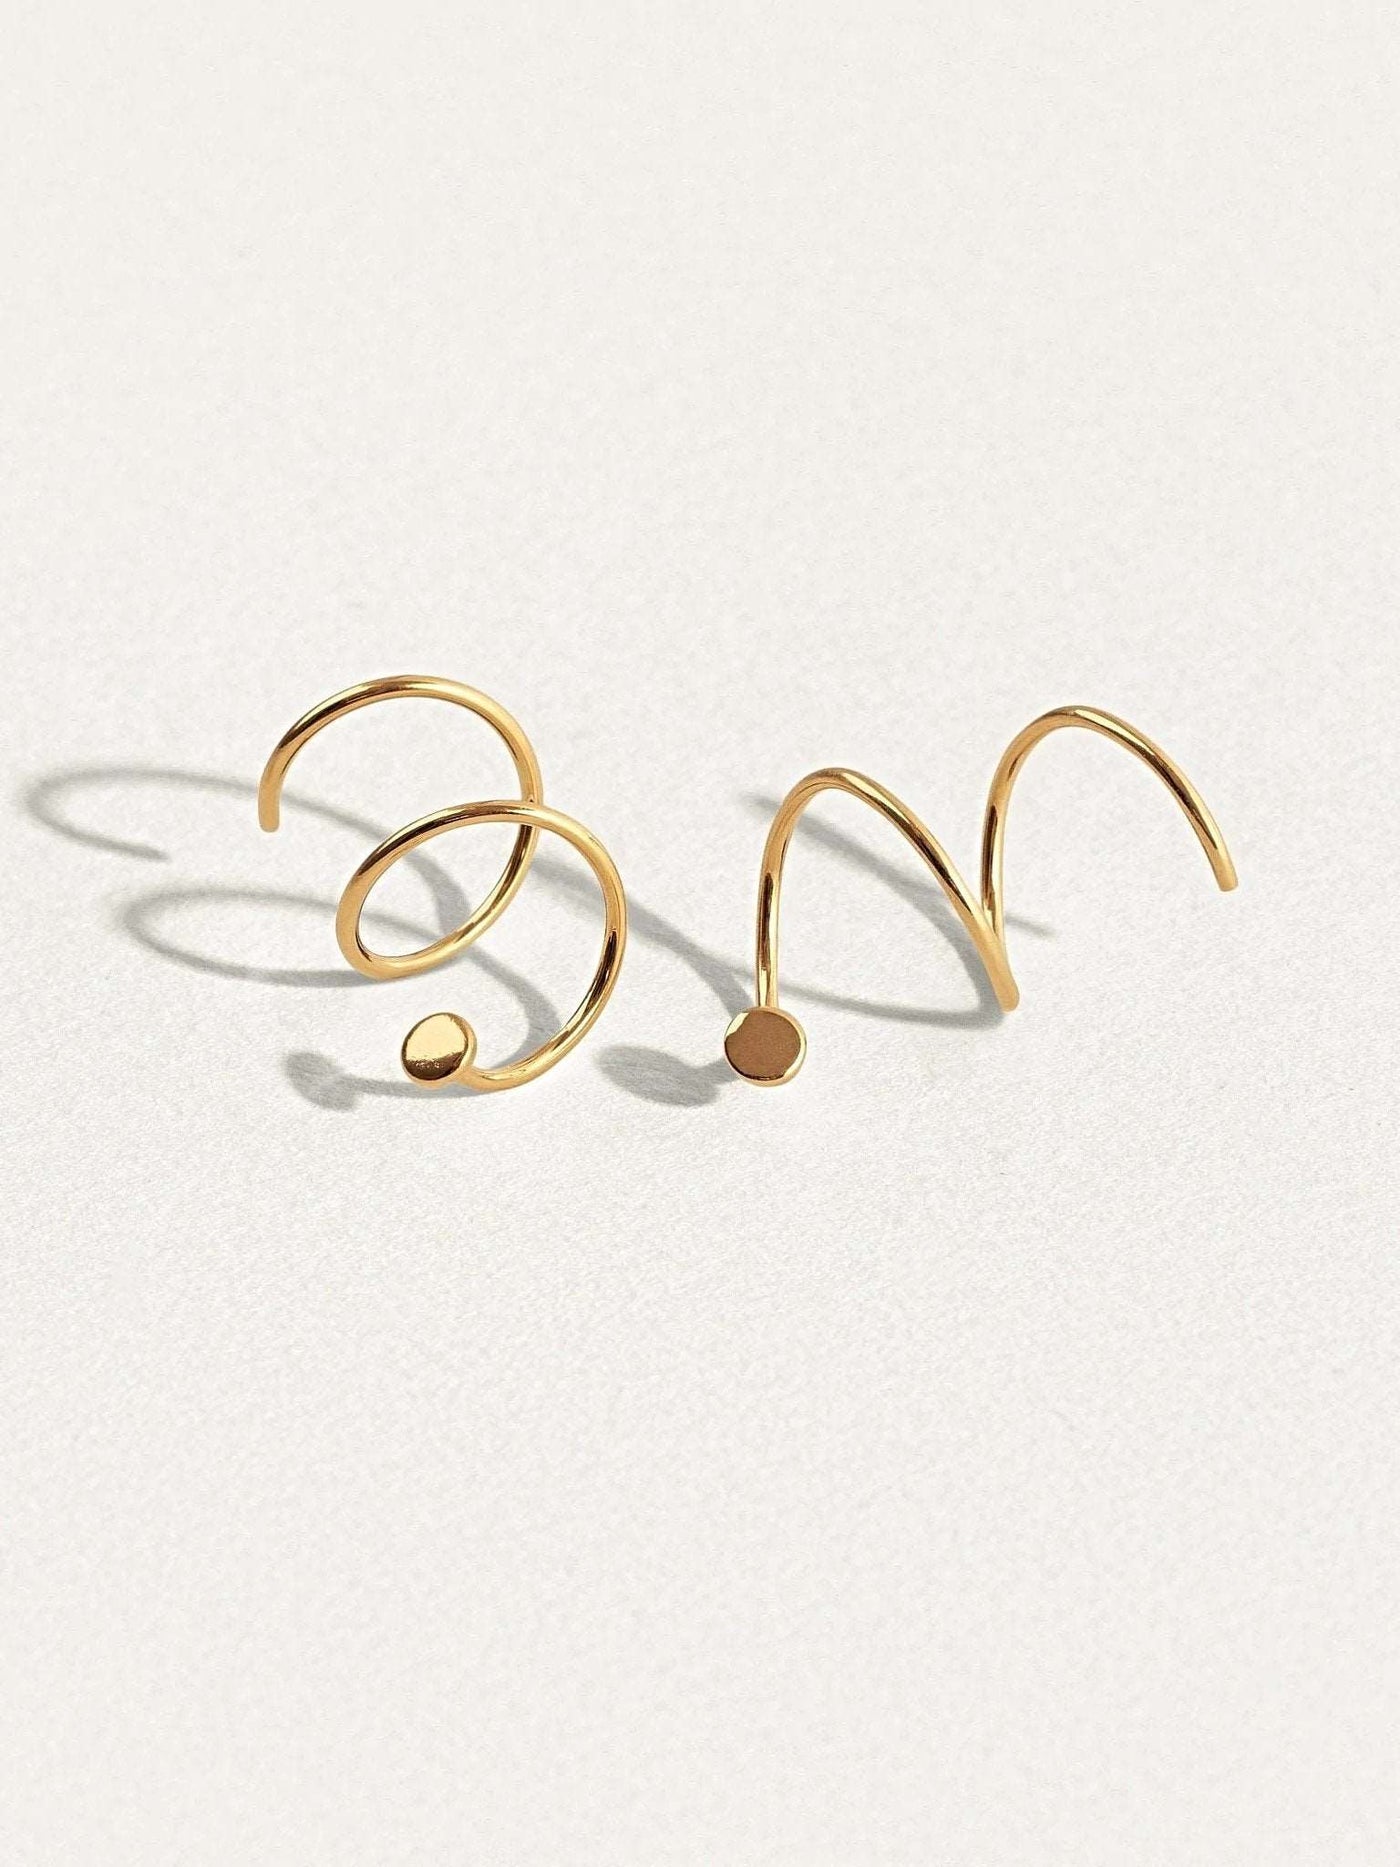 Lacey Spiral Earrings - Pair925 Sterling SilverBackUpItemsEarringsLunai Jewelry